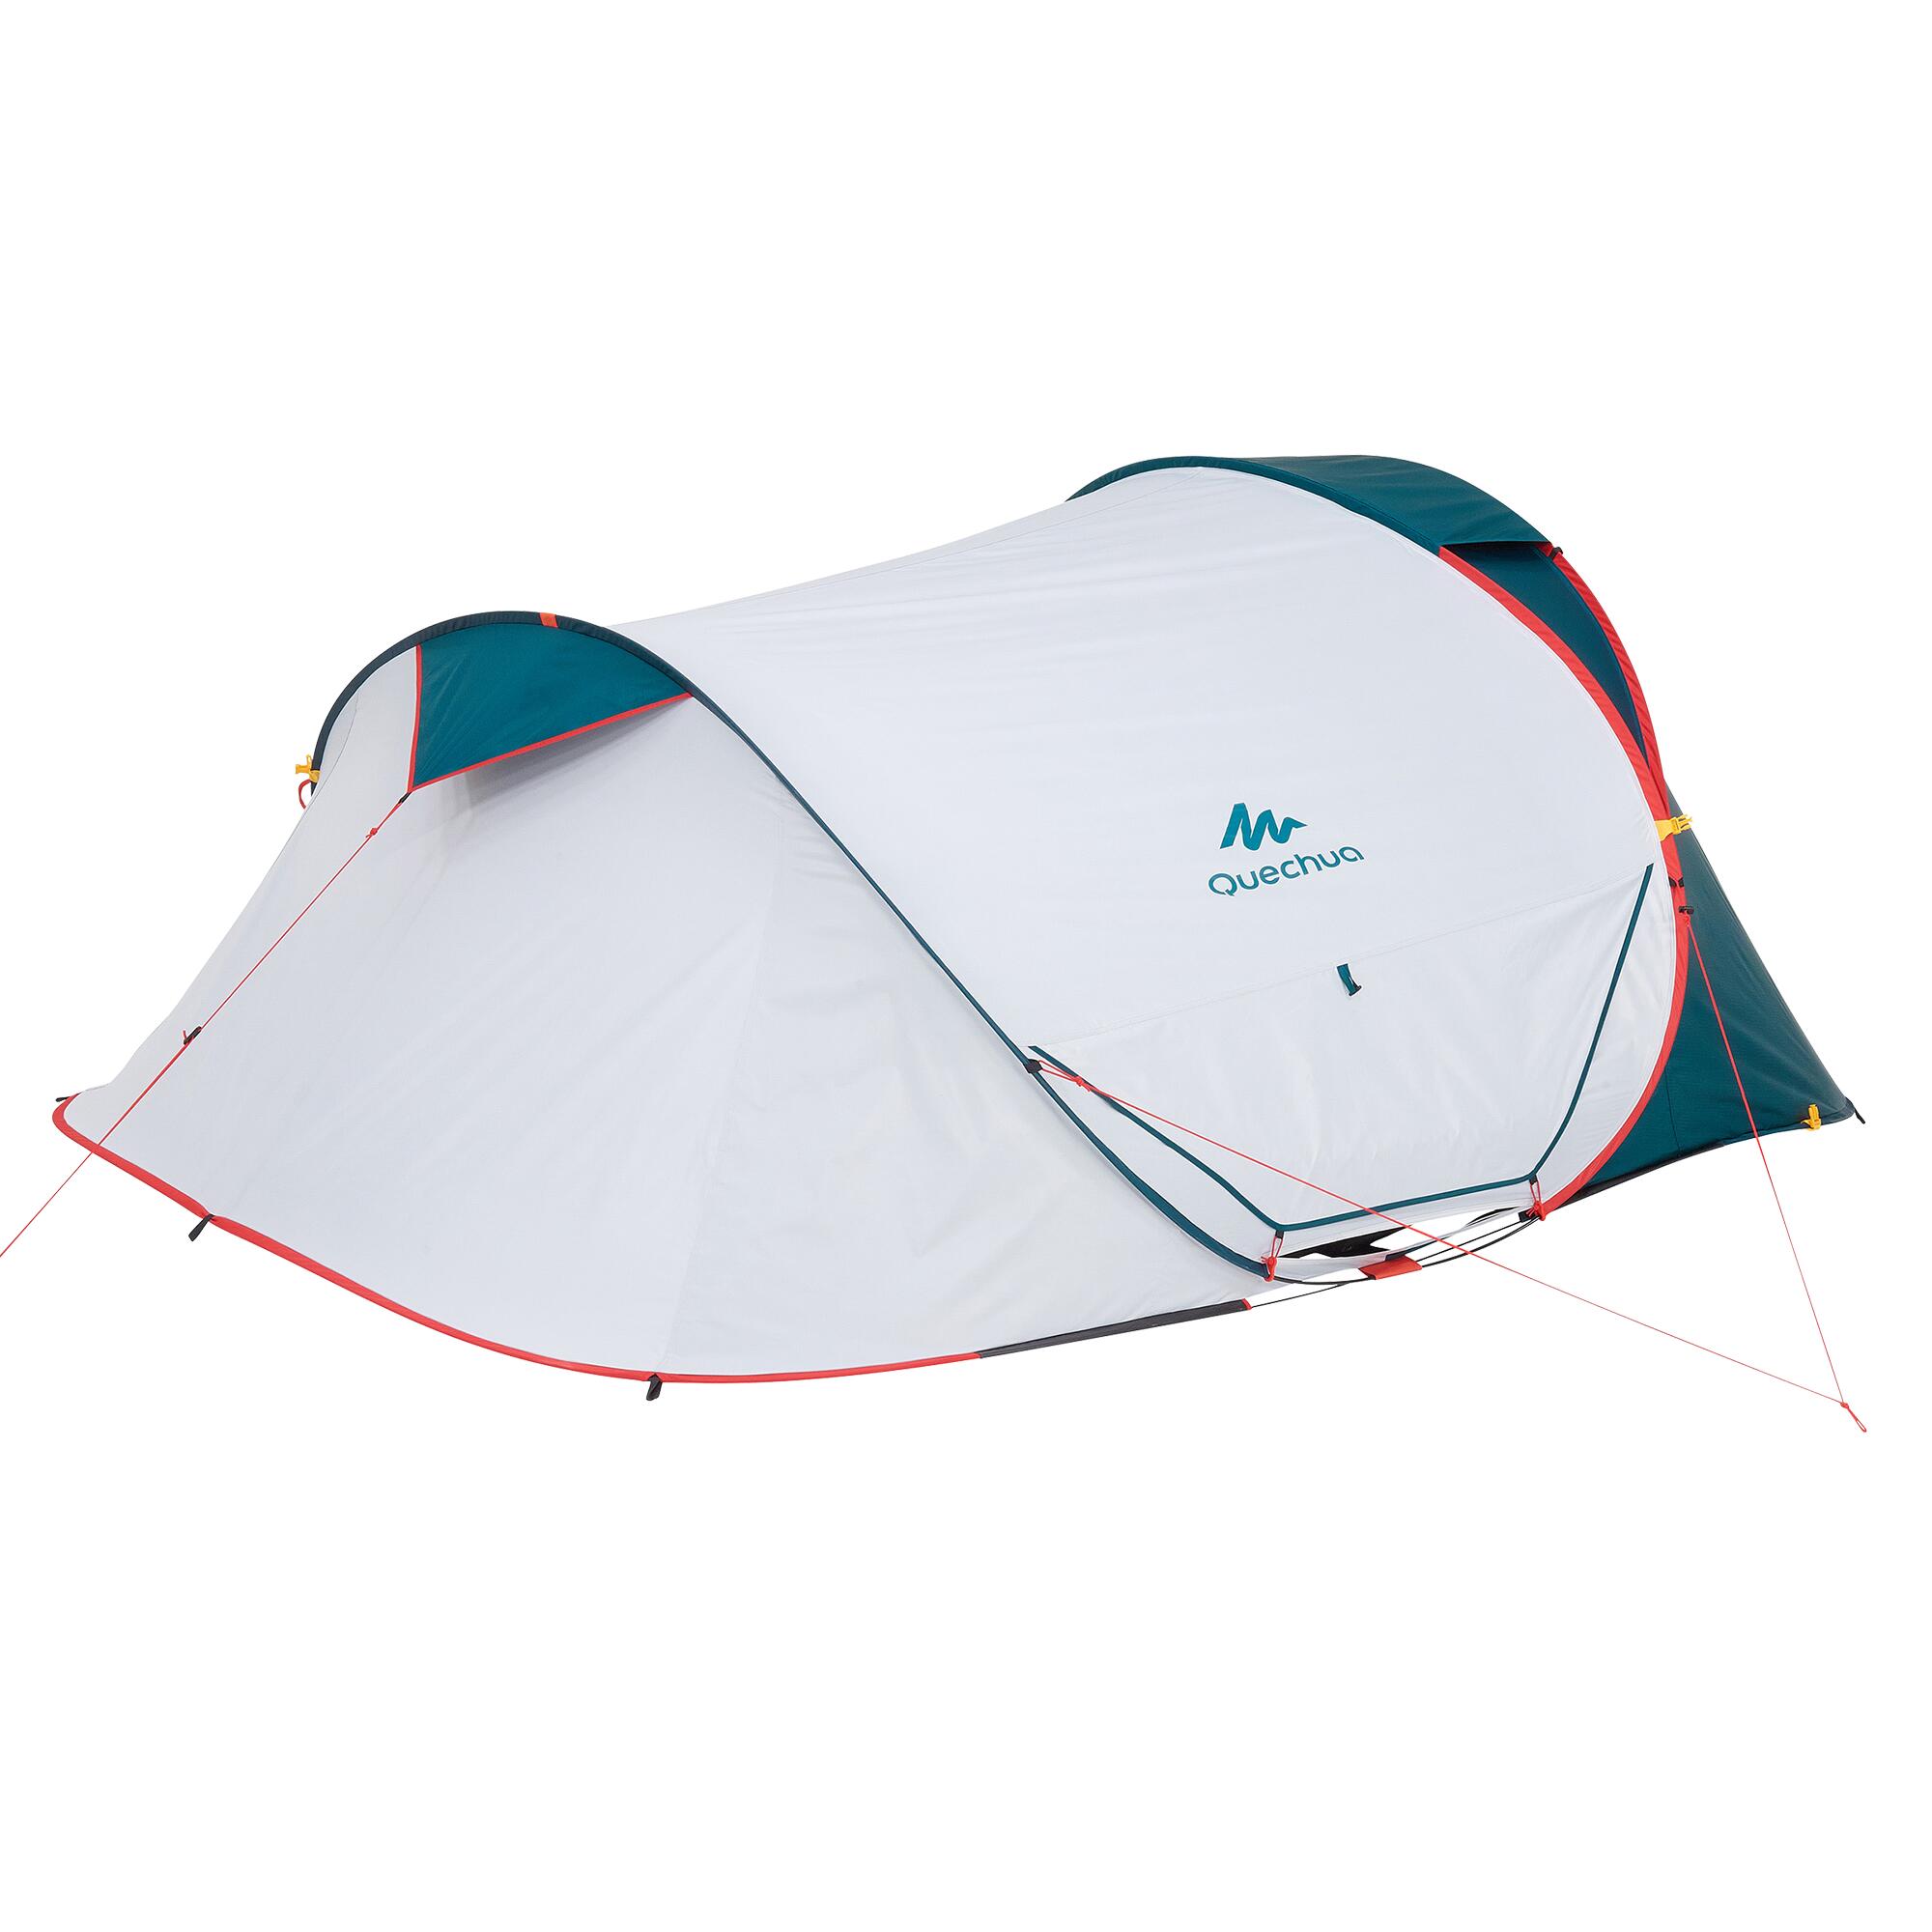 Camping tent - 2 SECONDS XL - 3-person - Fresh & Black 7/16